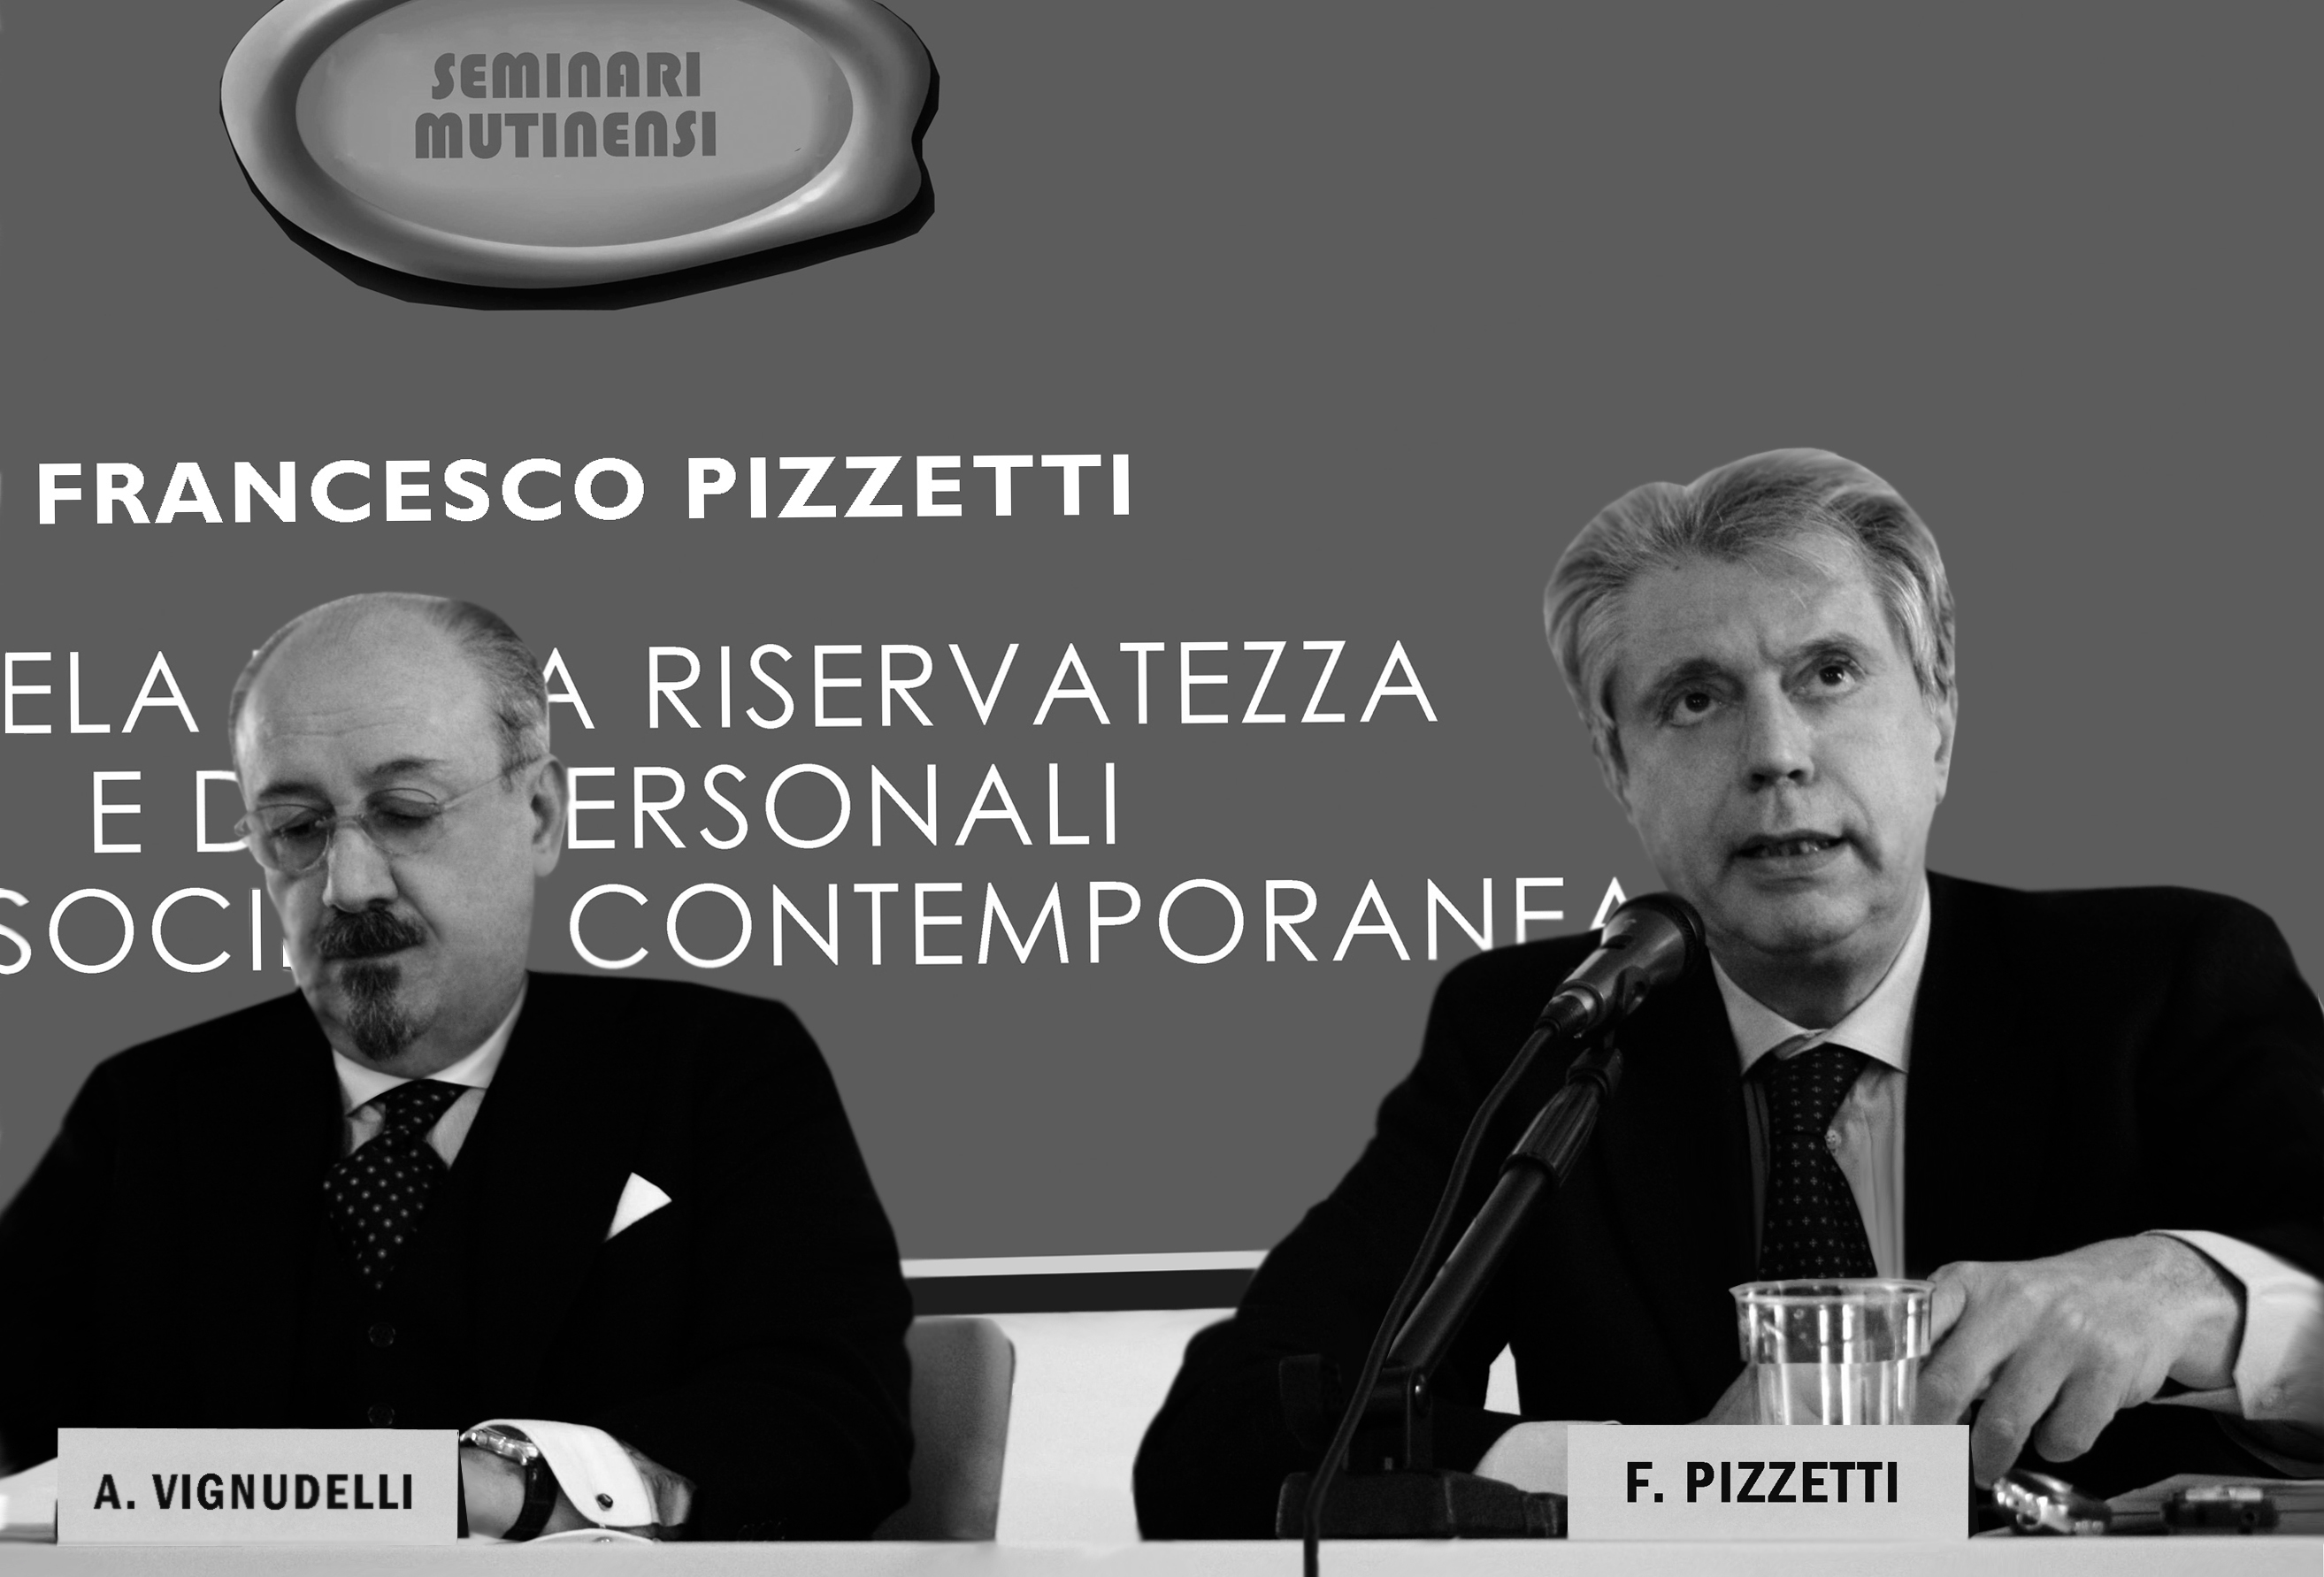 Francesco Pizzetti